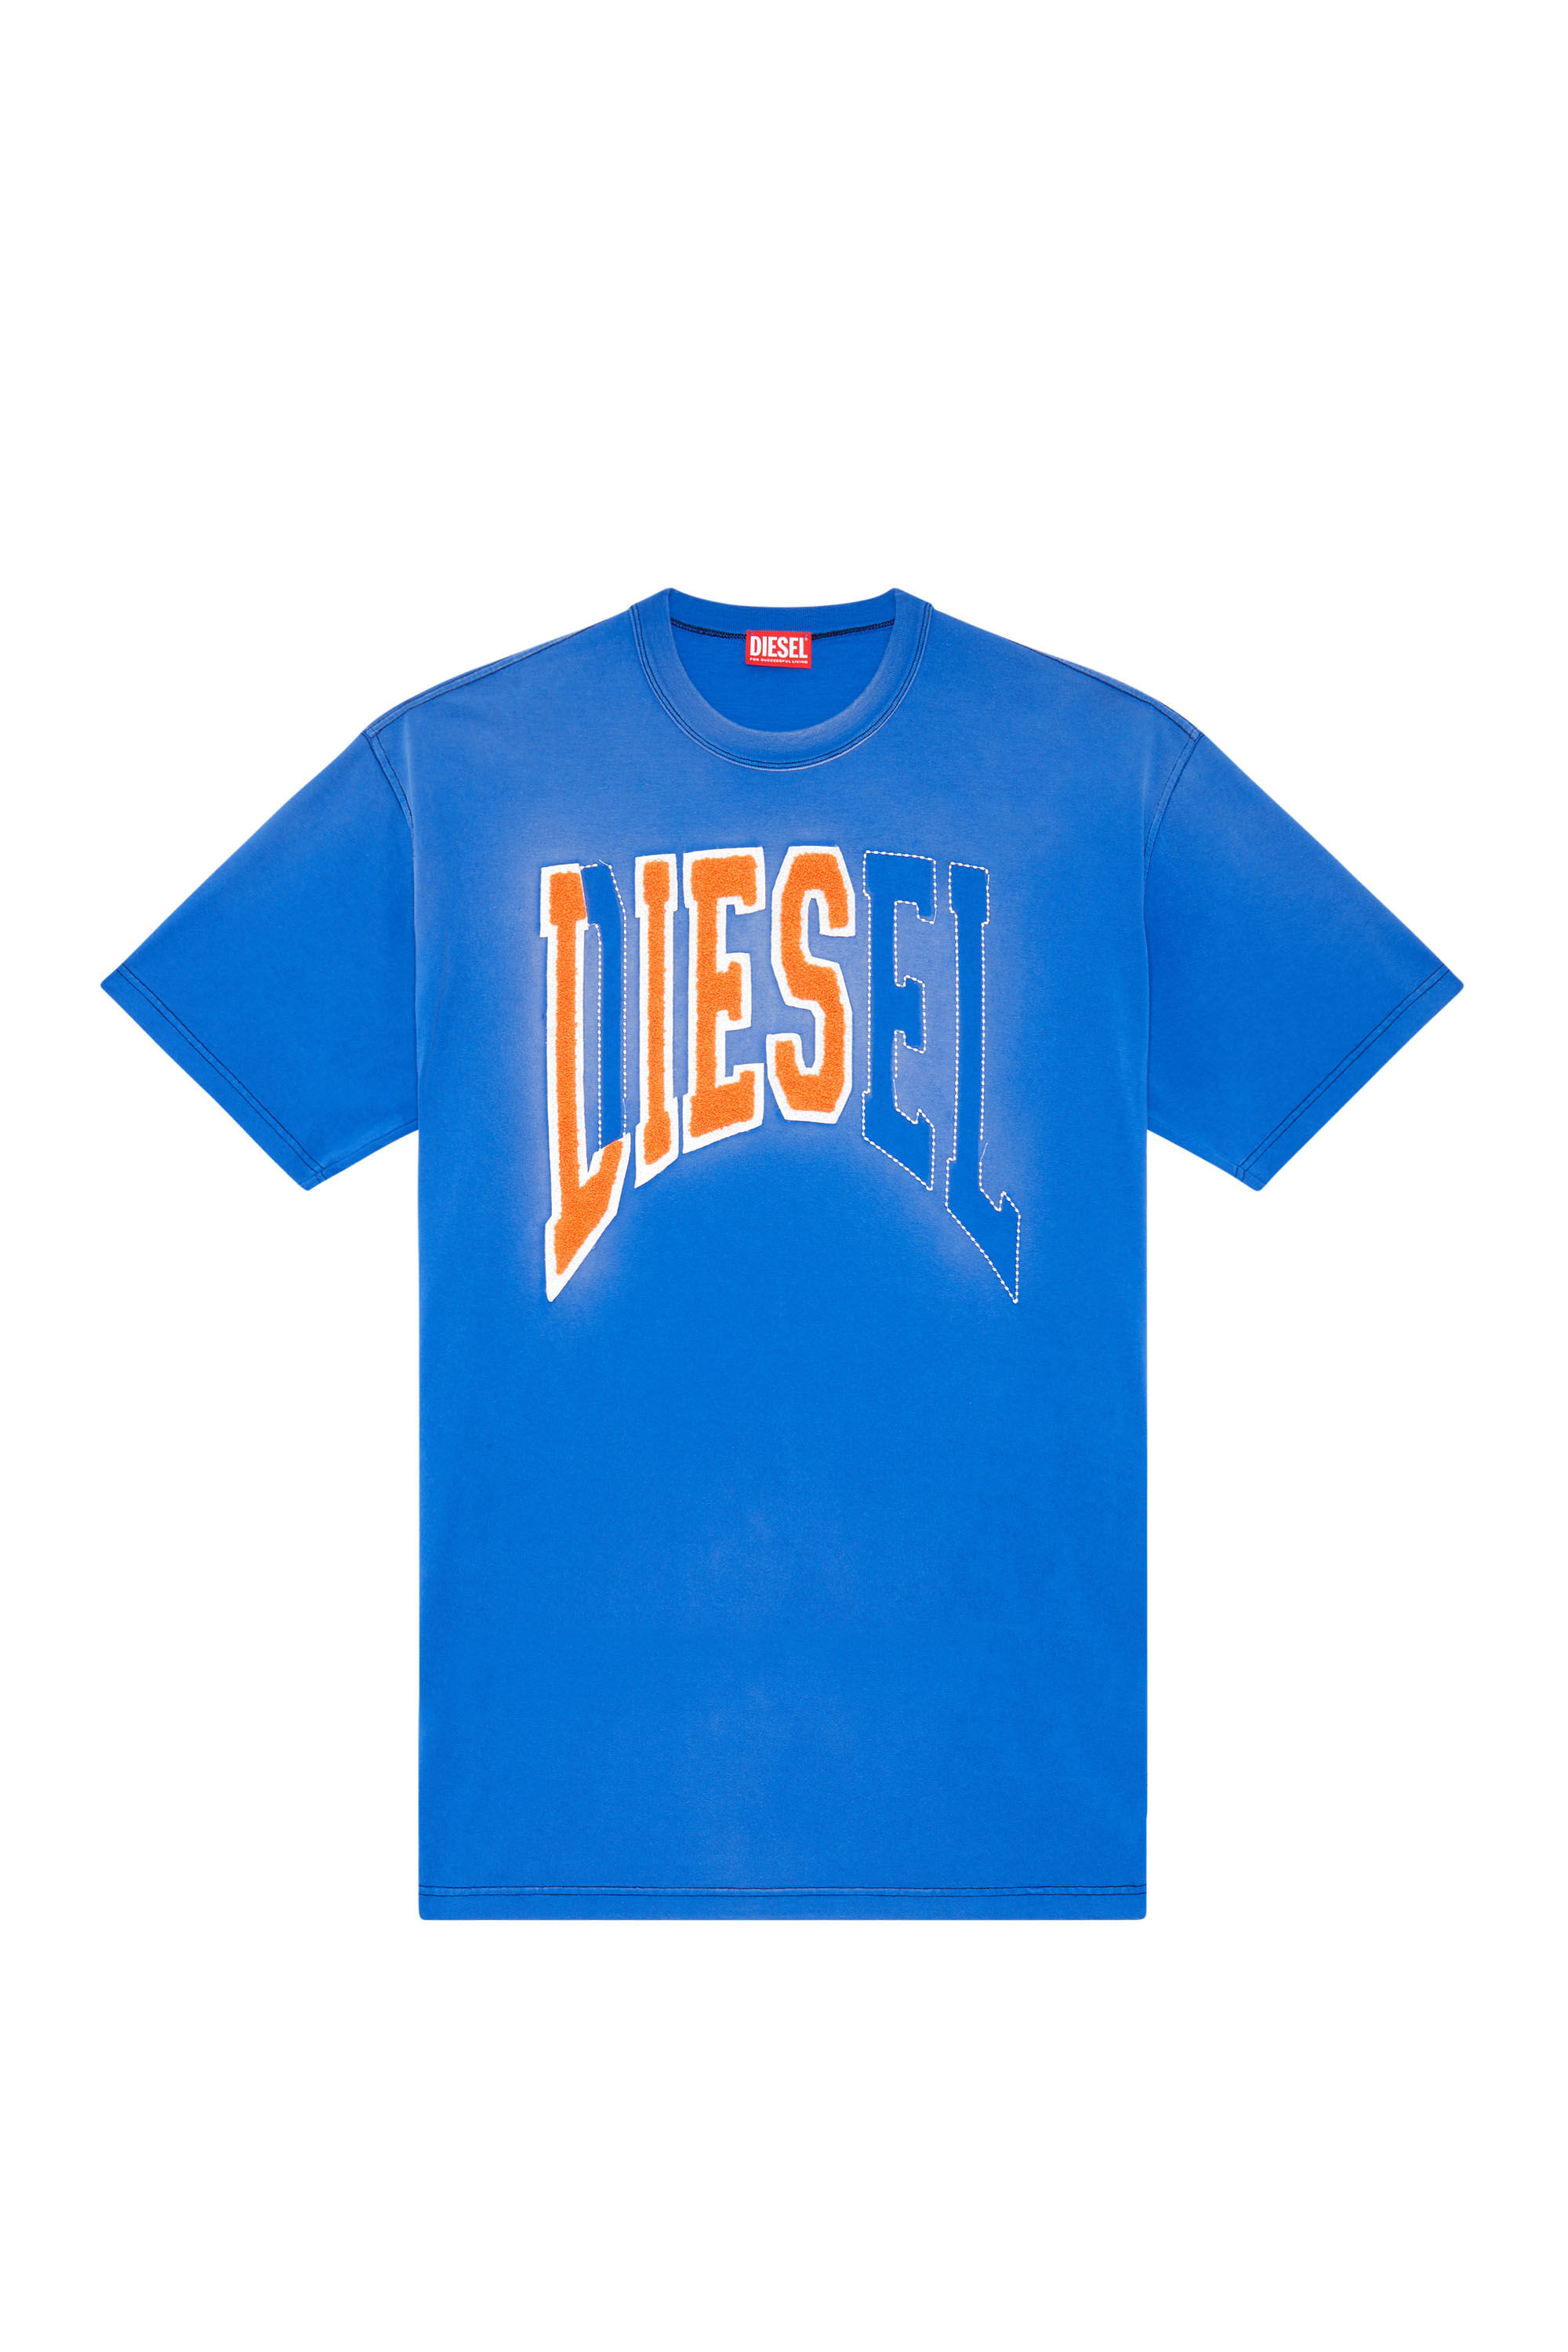 Diesel - T-WASH-N, Male Oversized T-shirt with Diesel Lies logo in Blue - Image 2